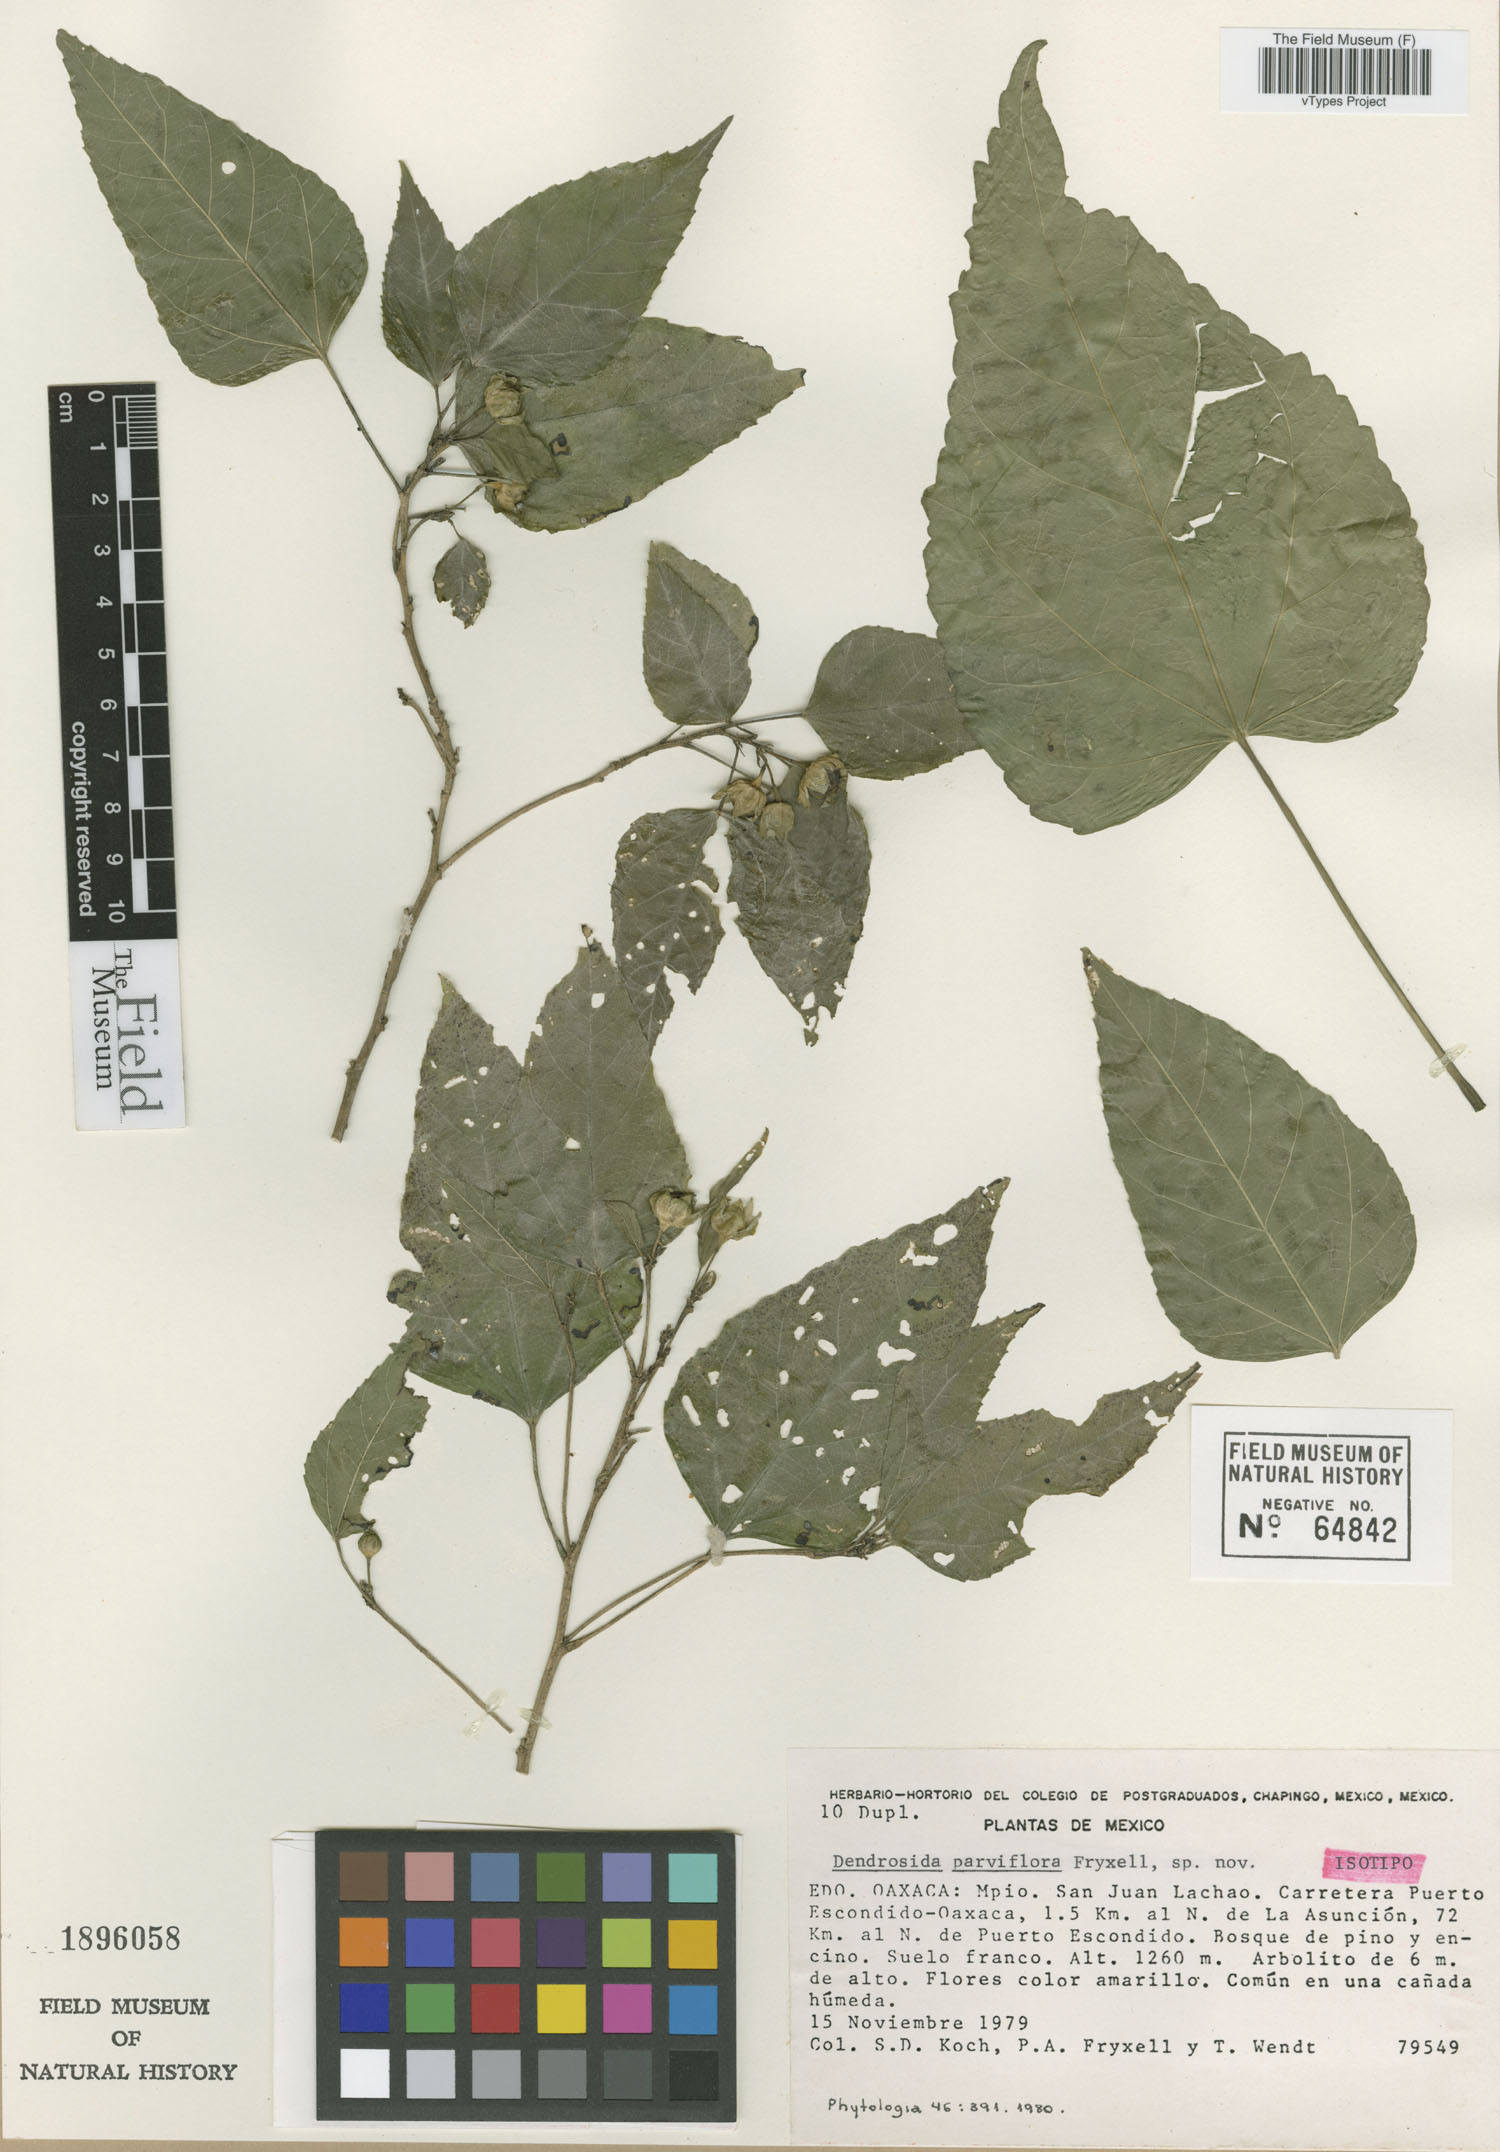 Dendrosida parviflora image